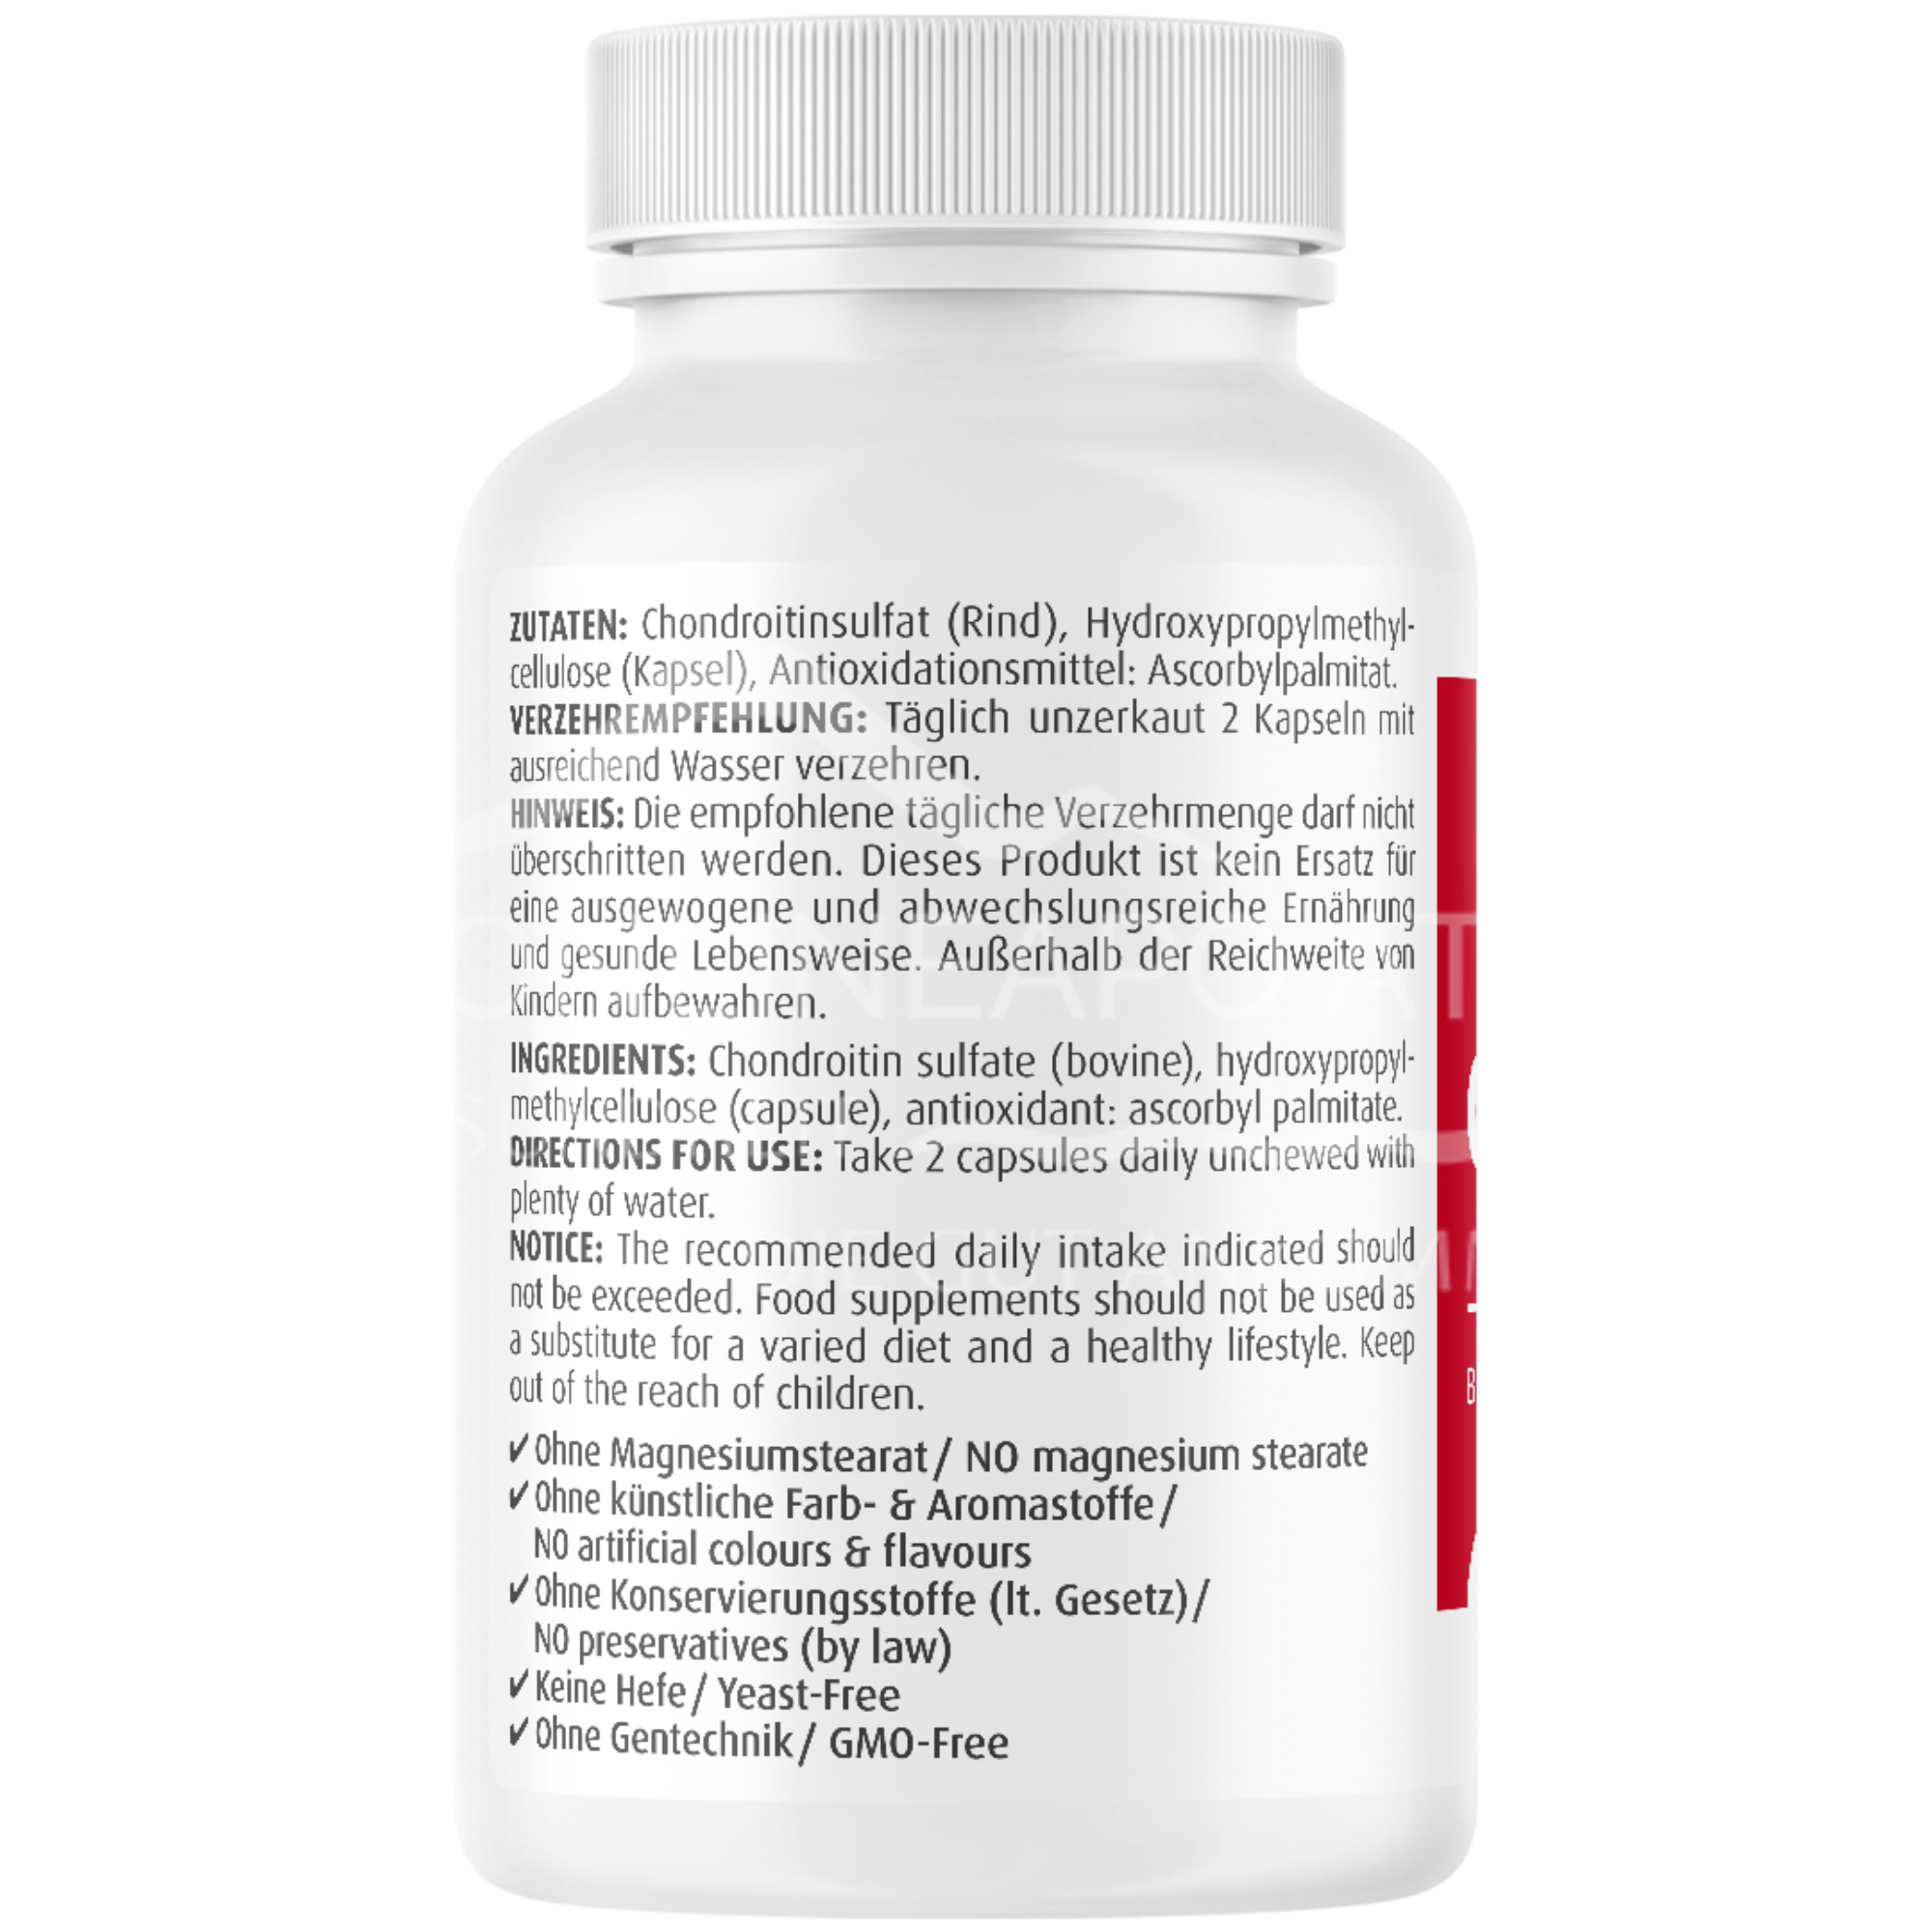 ZeinPharma Chondroitin 500 mg Kapseln